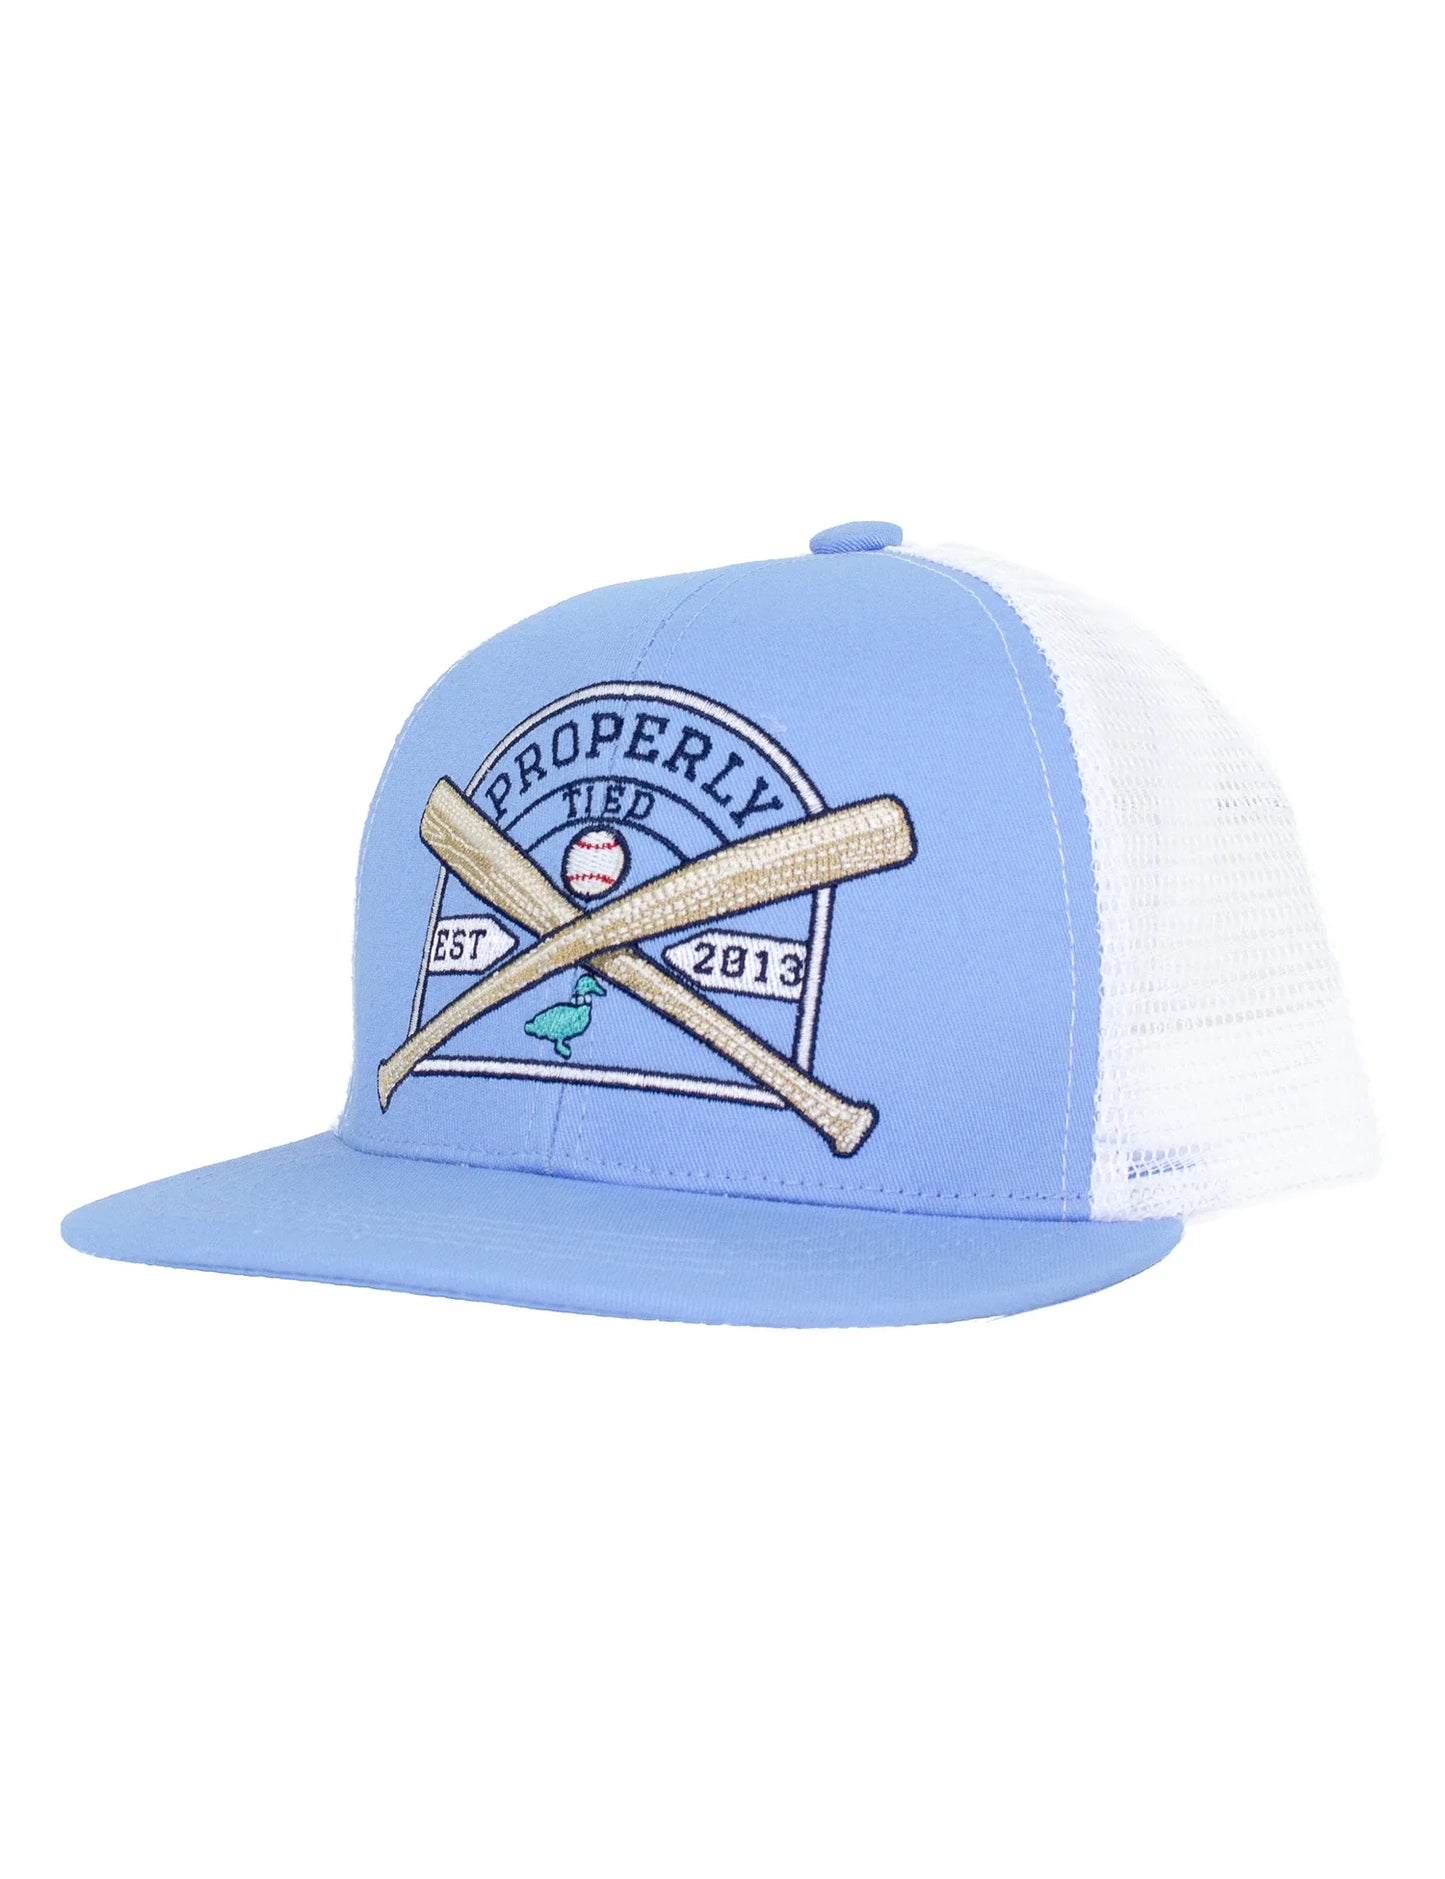 Boys Trucker Hat, Baseball Shield